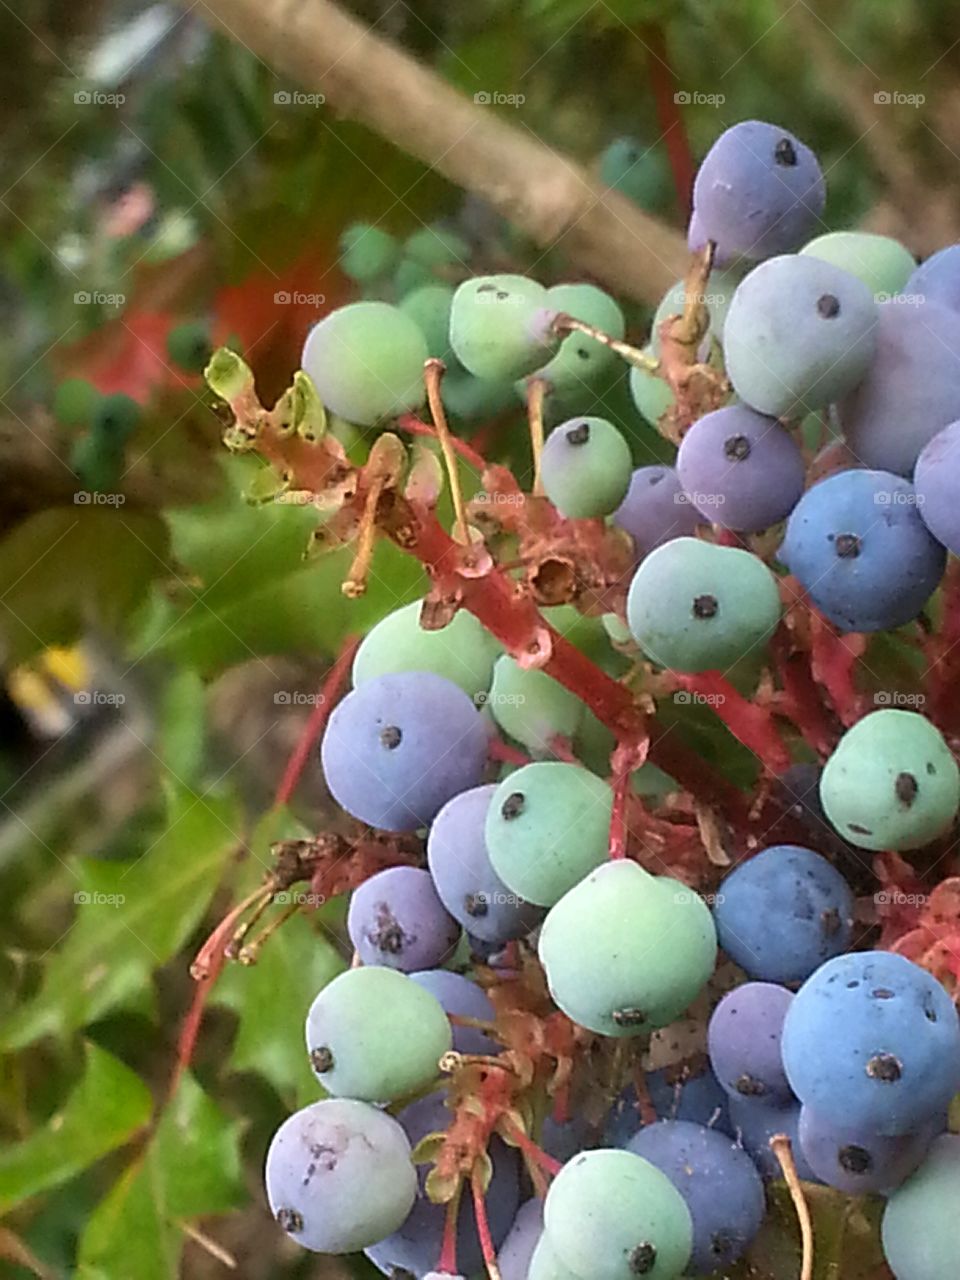 tacoma berries